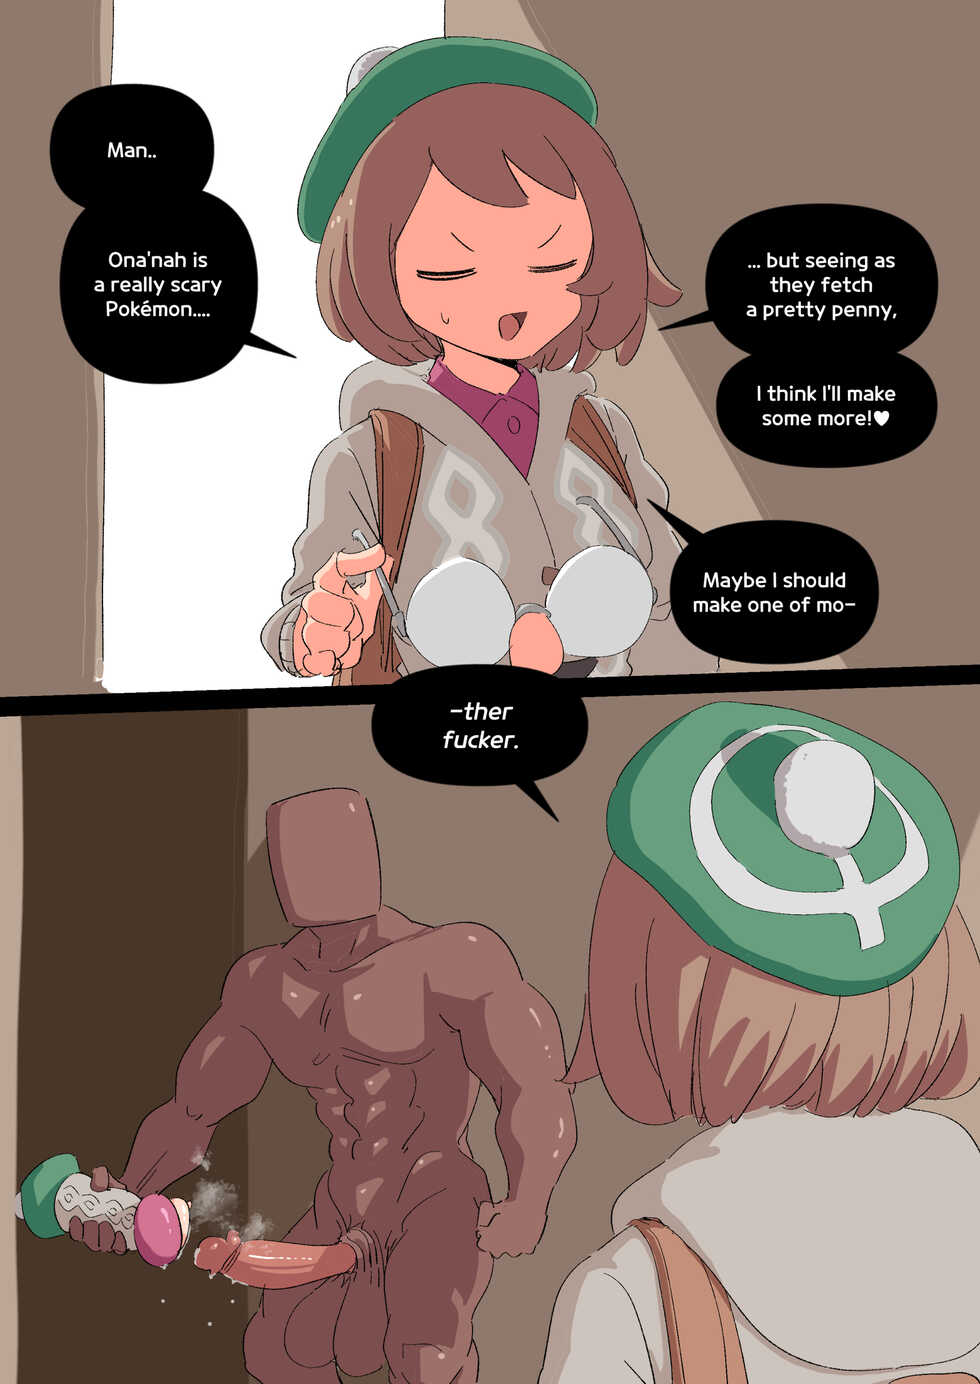 [Woomochichi] Introducing! Gallar's new Pokemon, Ona'nah! - Page 16